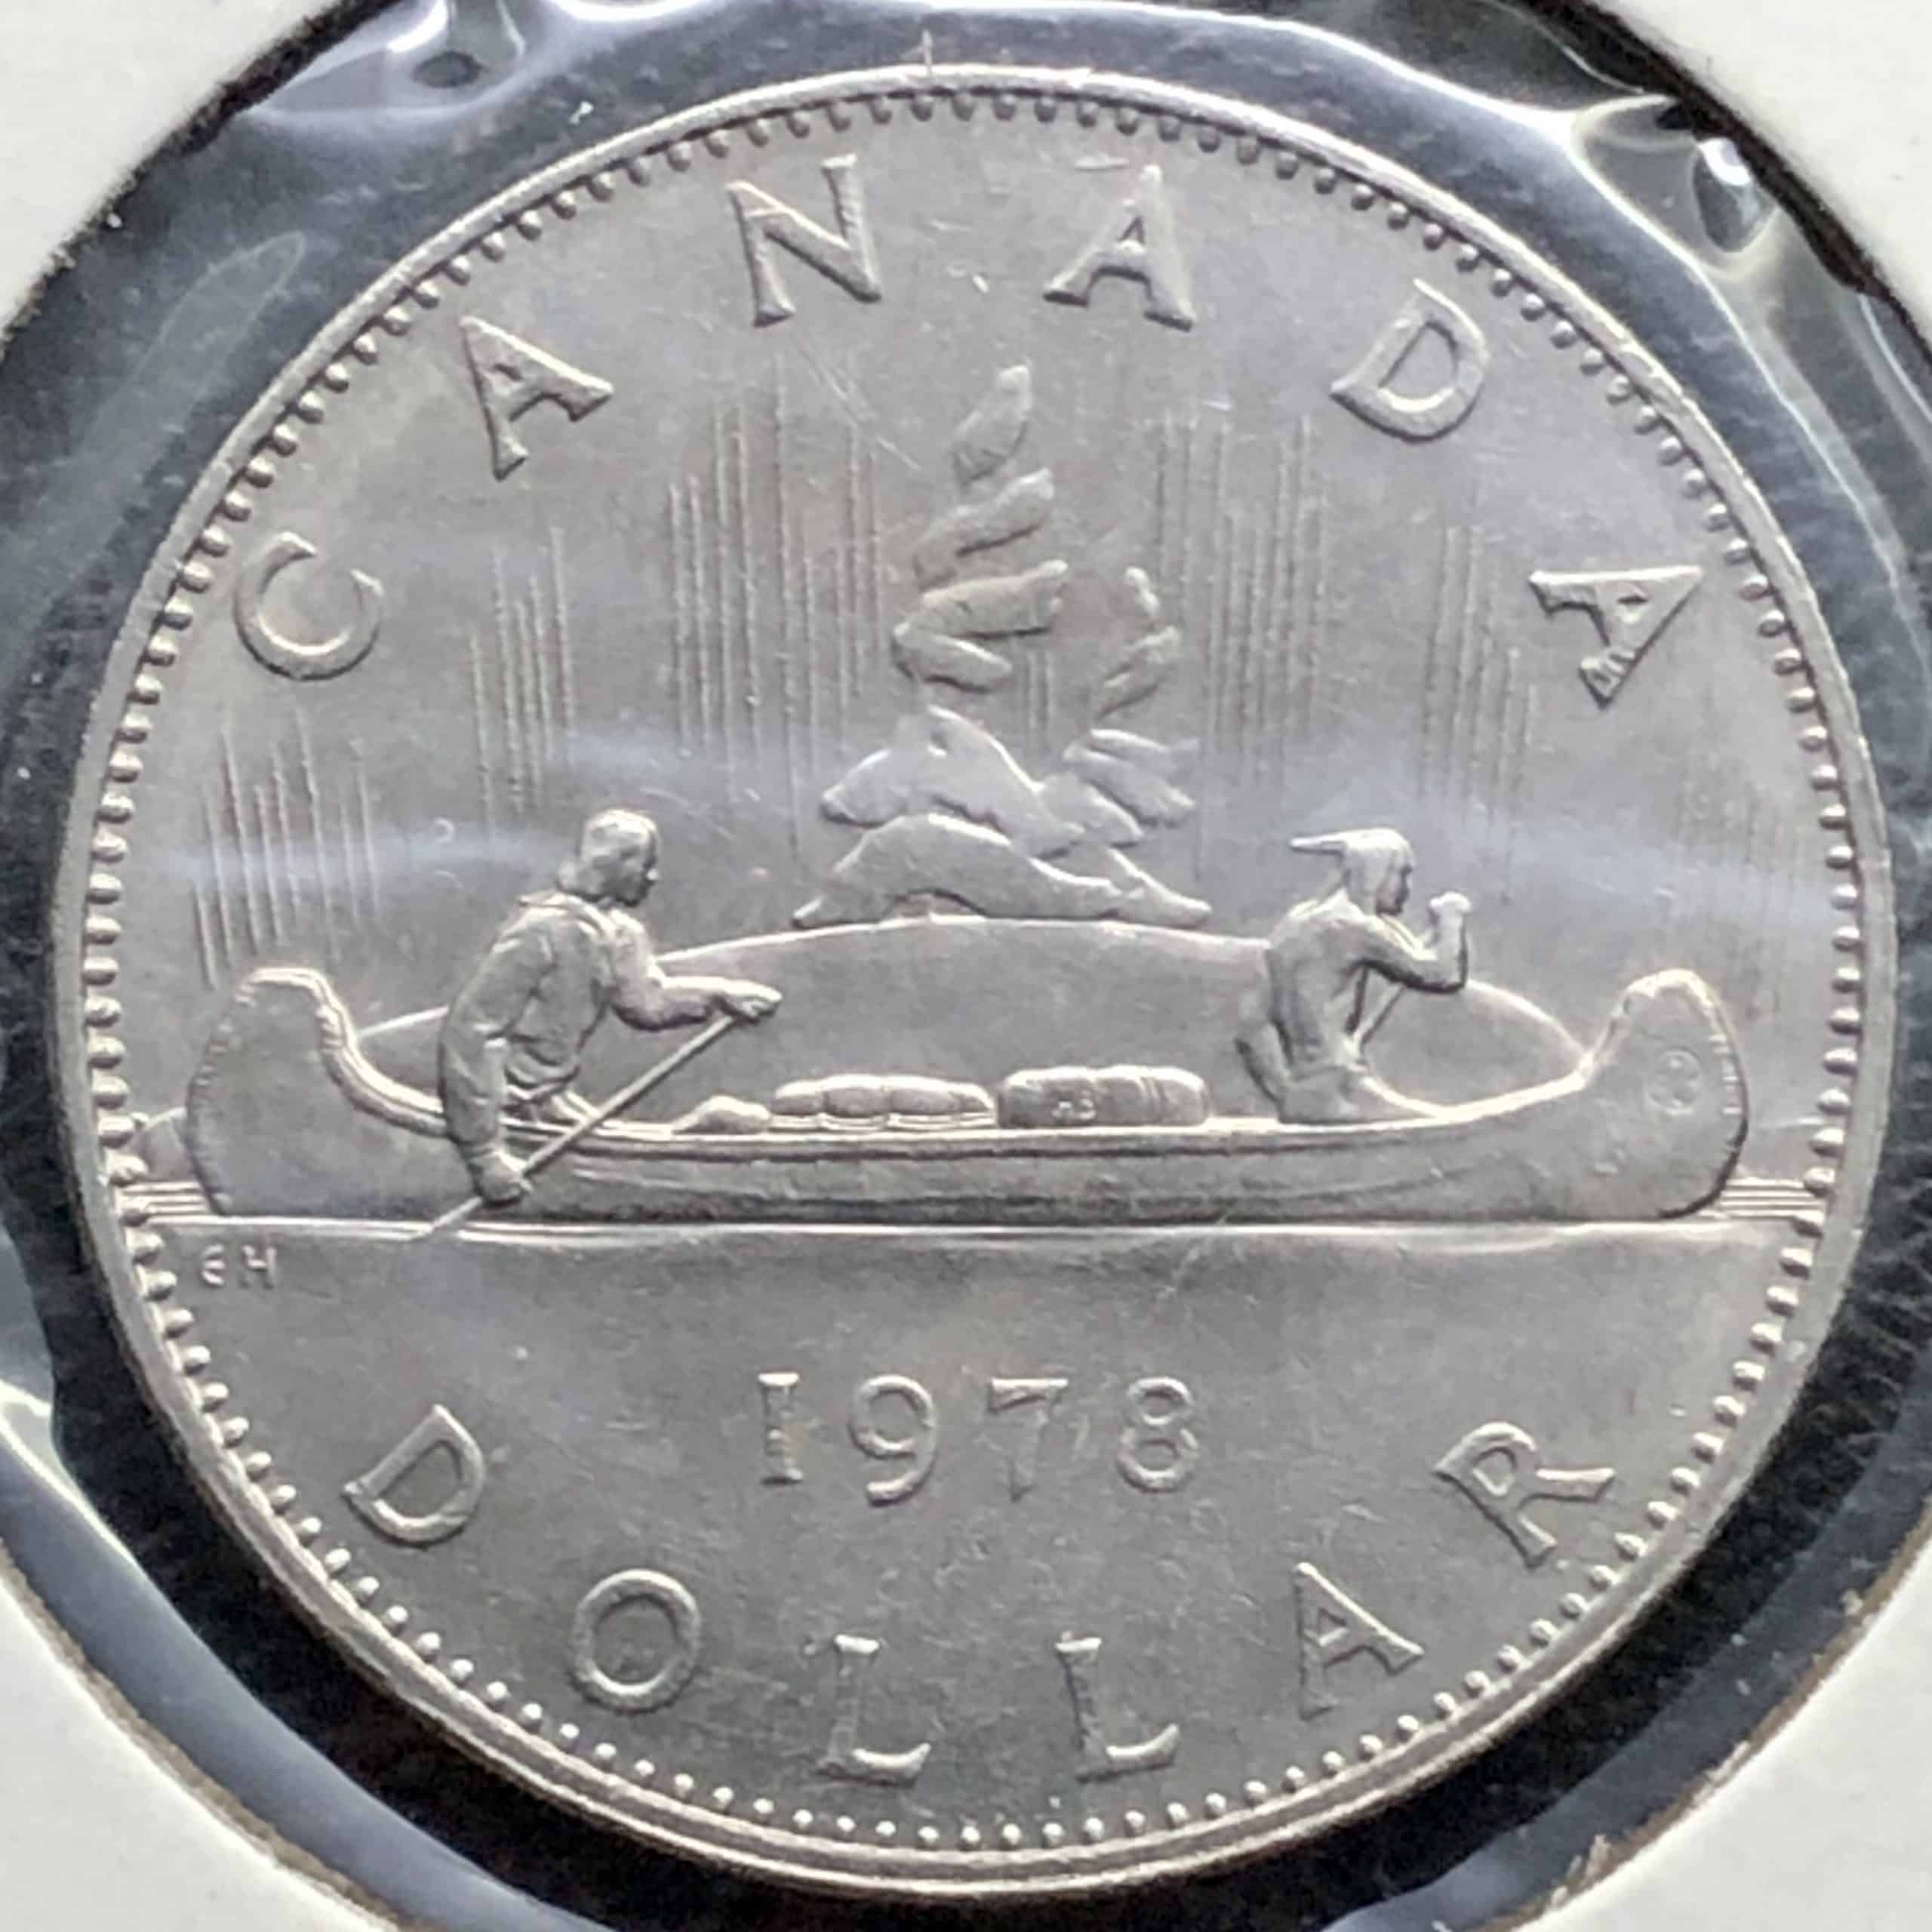 Canada - Dollar 1978 Voyageur - UNC